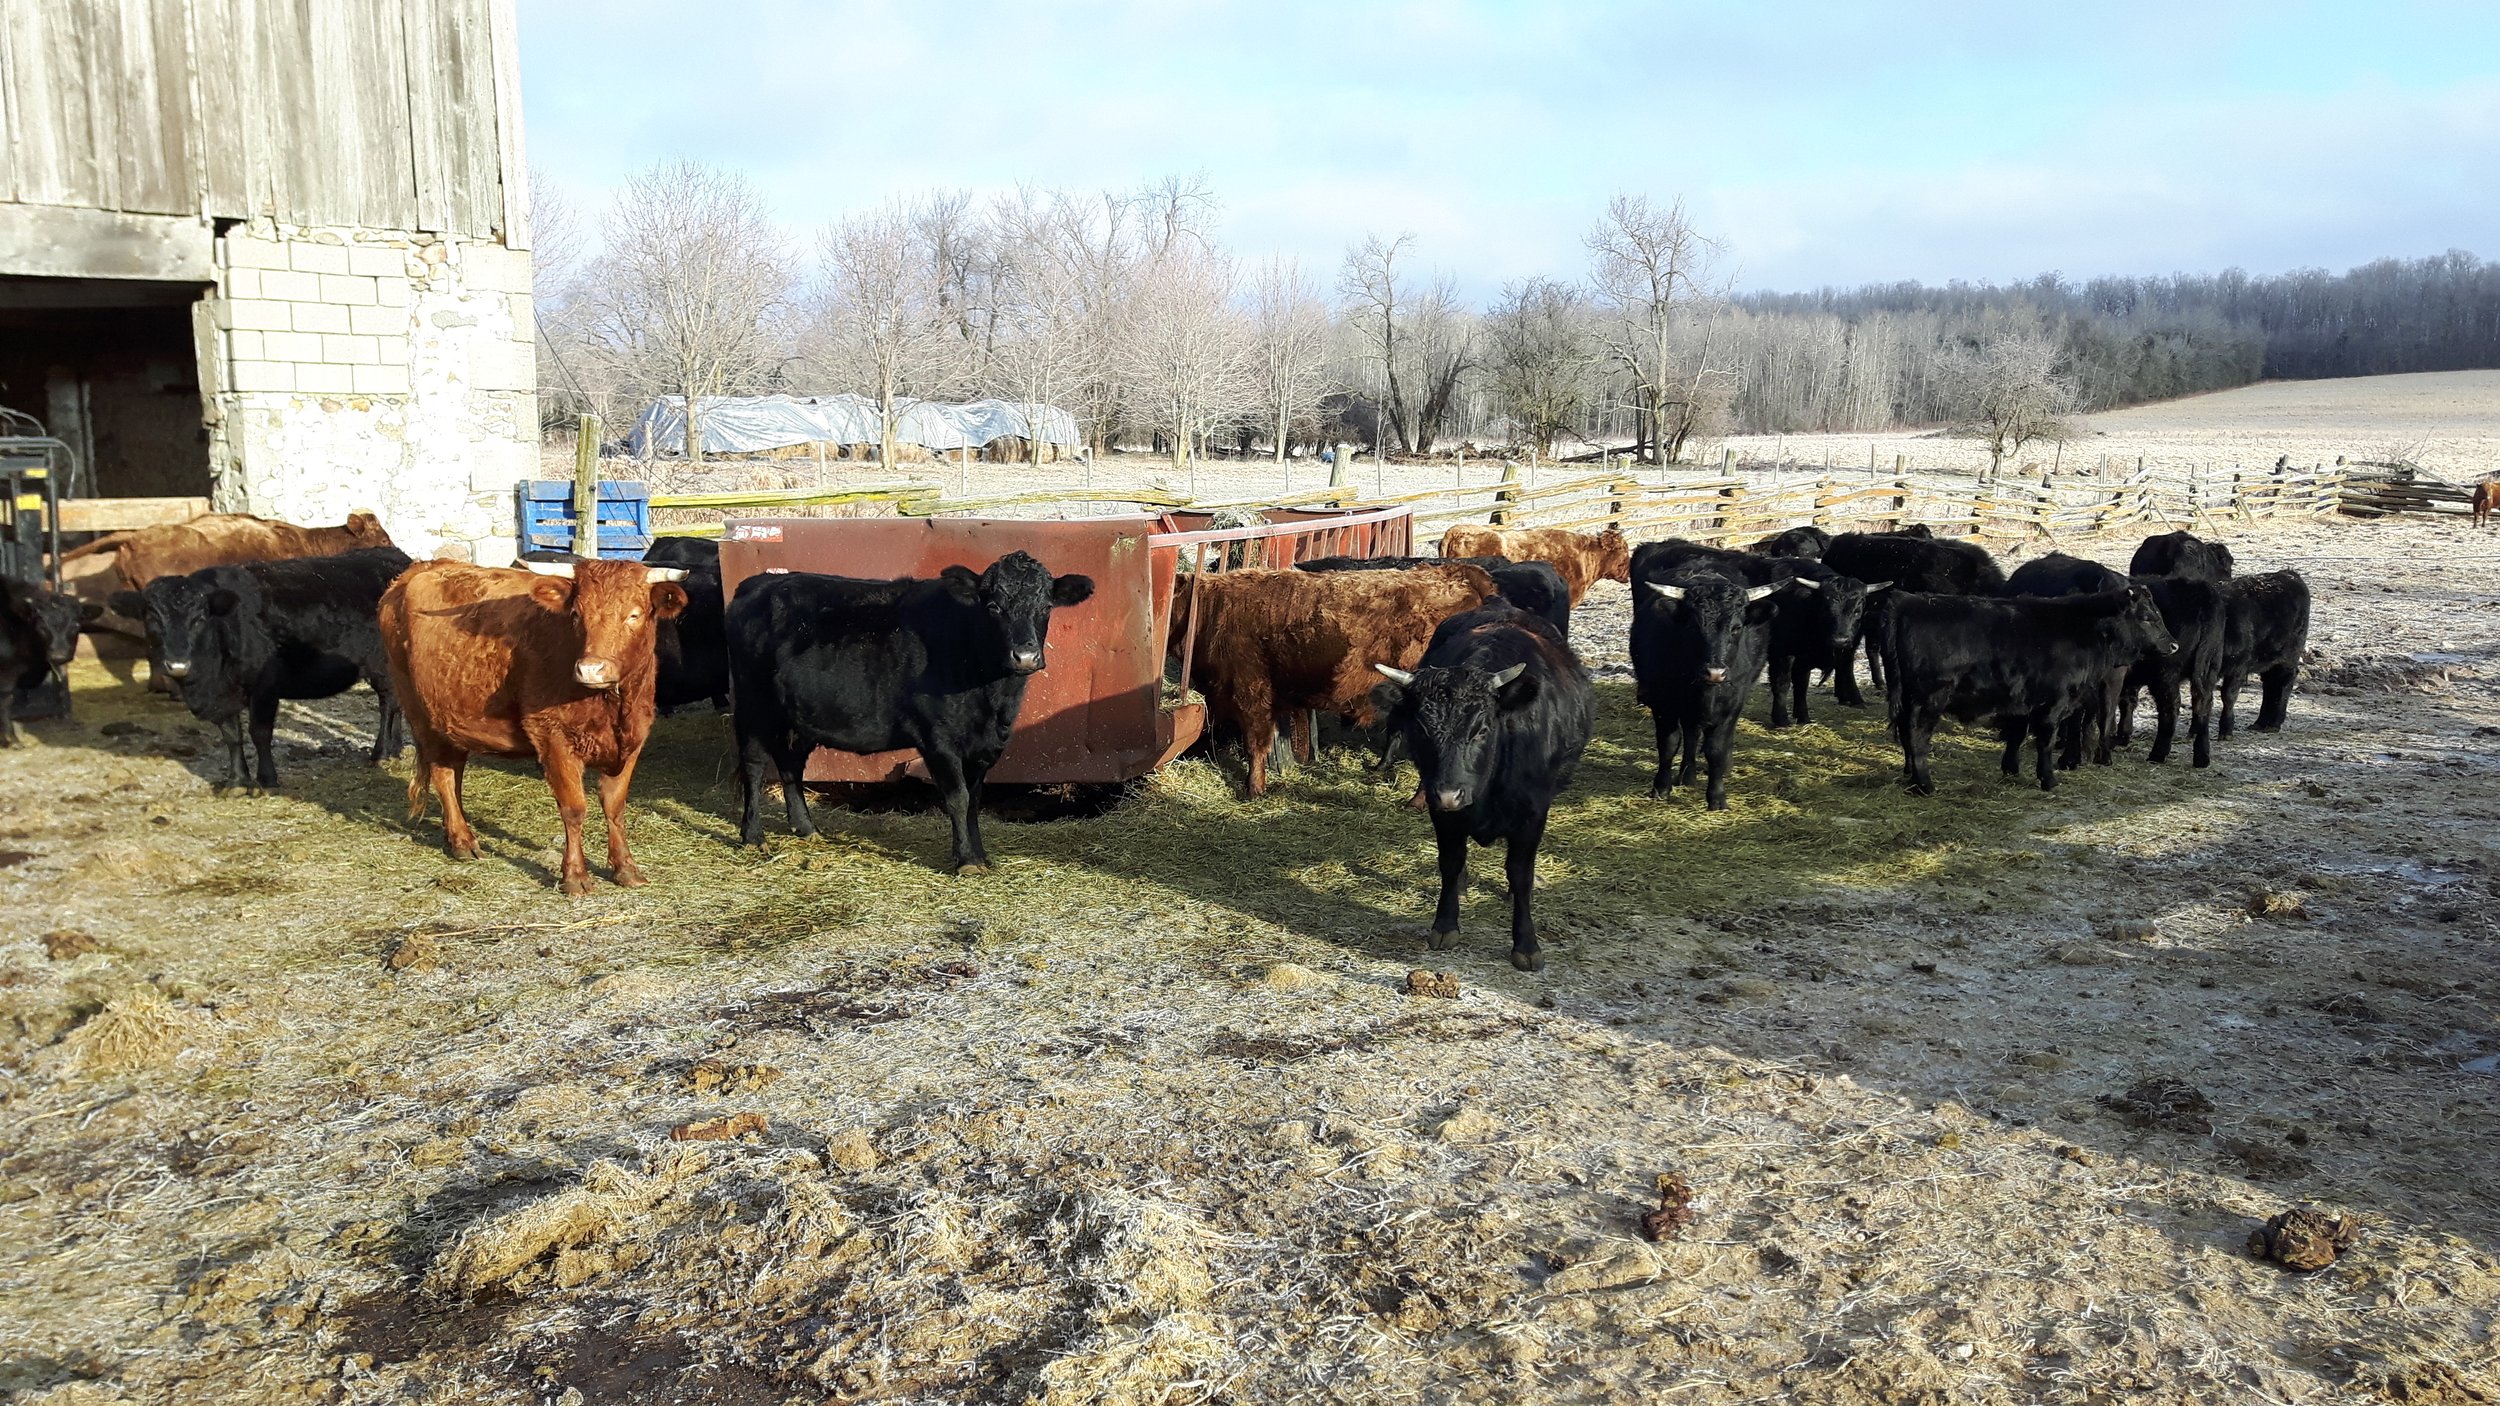 cattle in barnyard.jpg